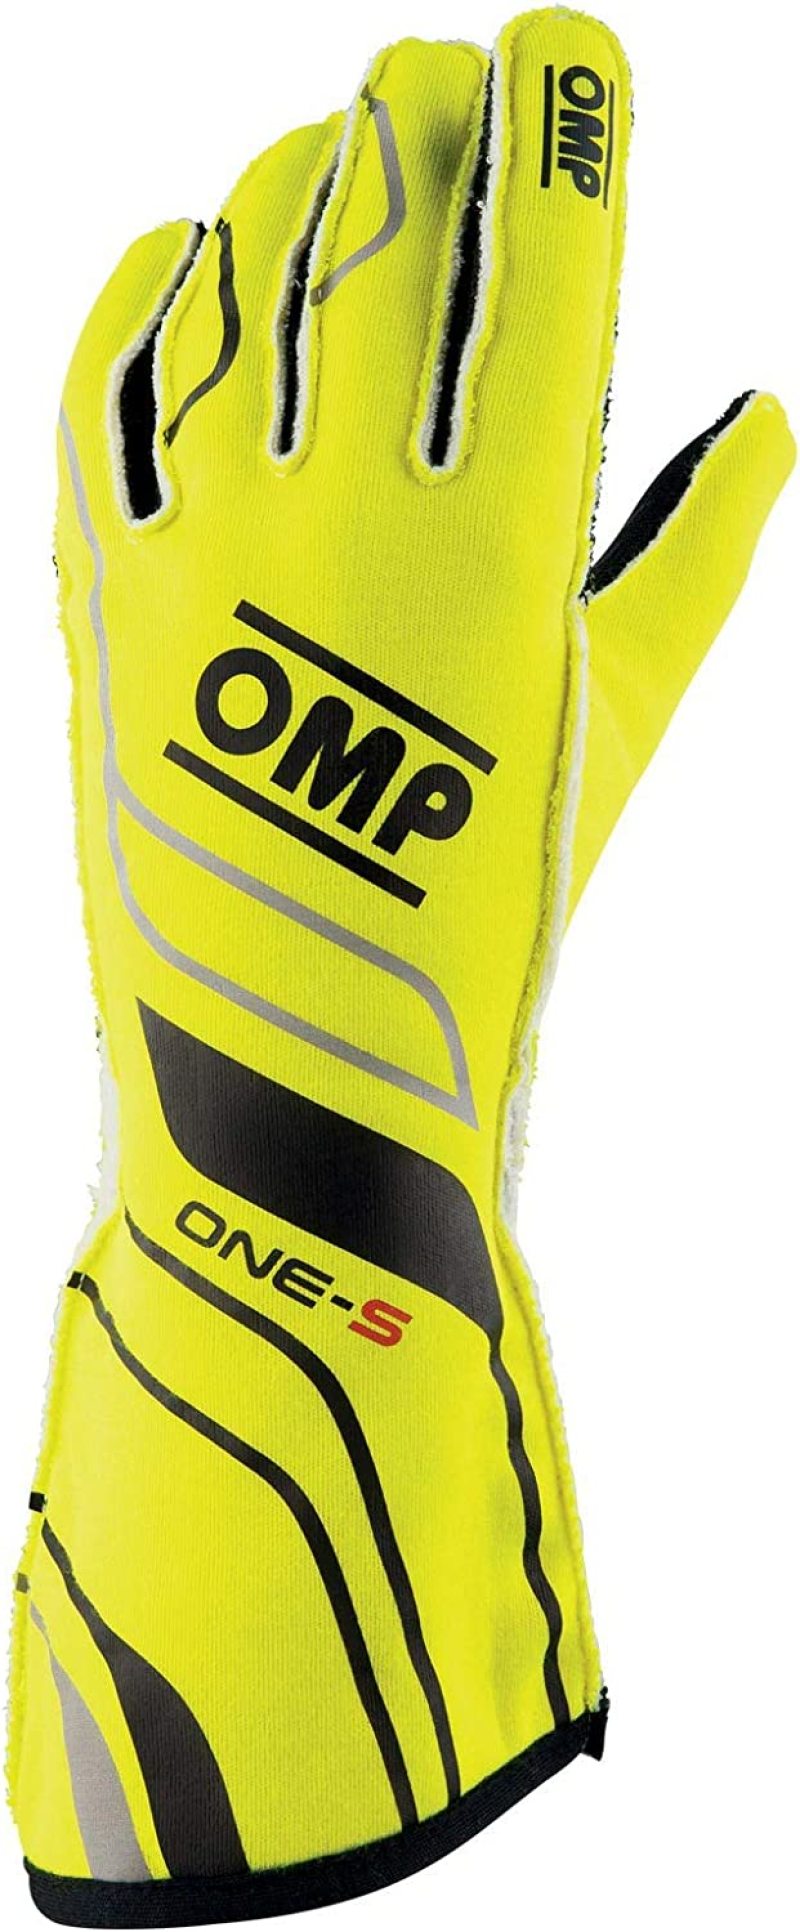 OMP One-S Gloves Fluorescent Yellow - Size L Fia 8556-2018 - IB0-0770-A01-099-L